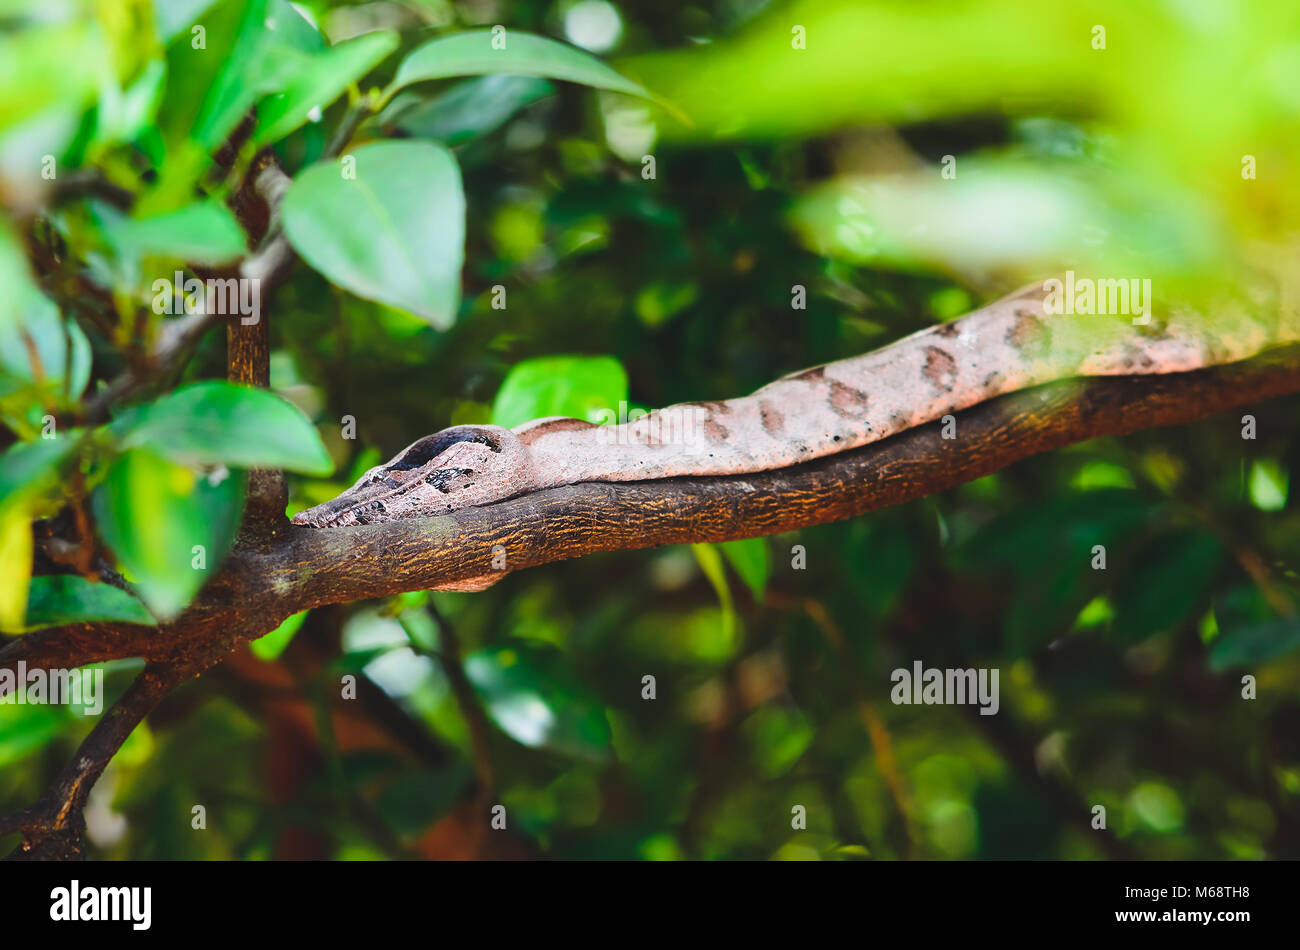 Wild Jararaca snake on a tree branch. Stock Photo